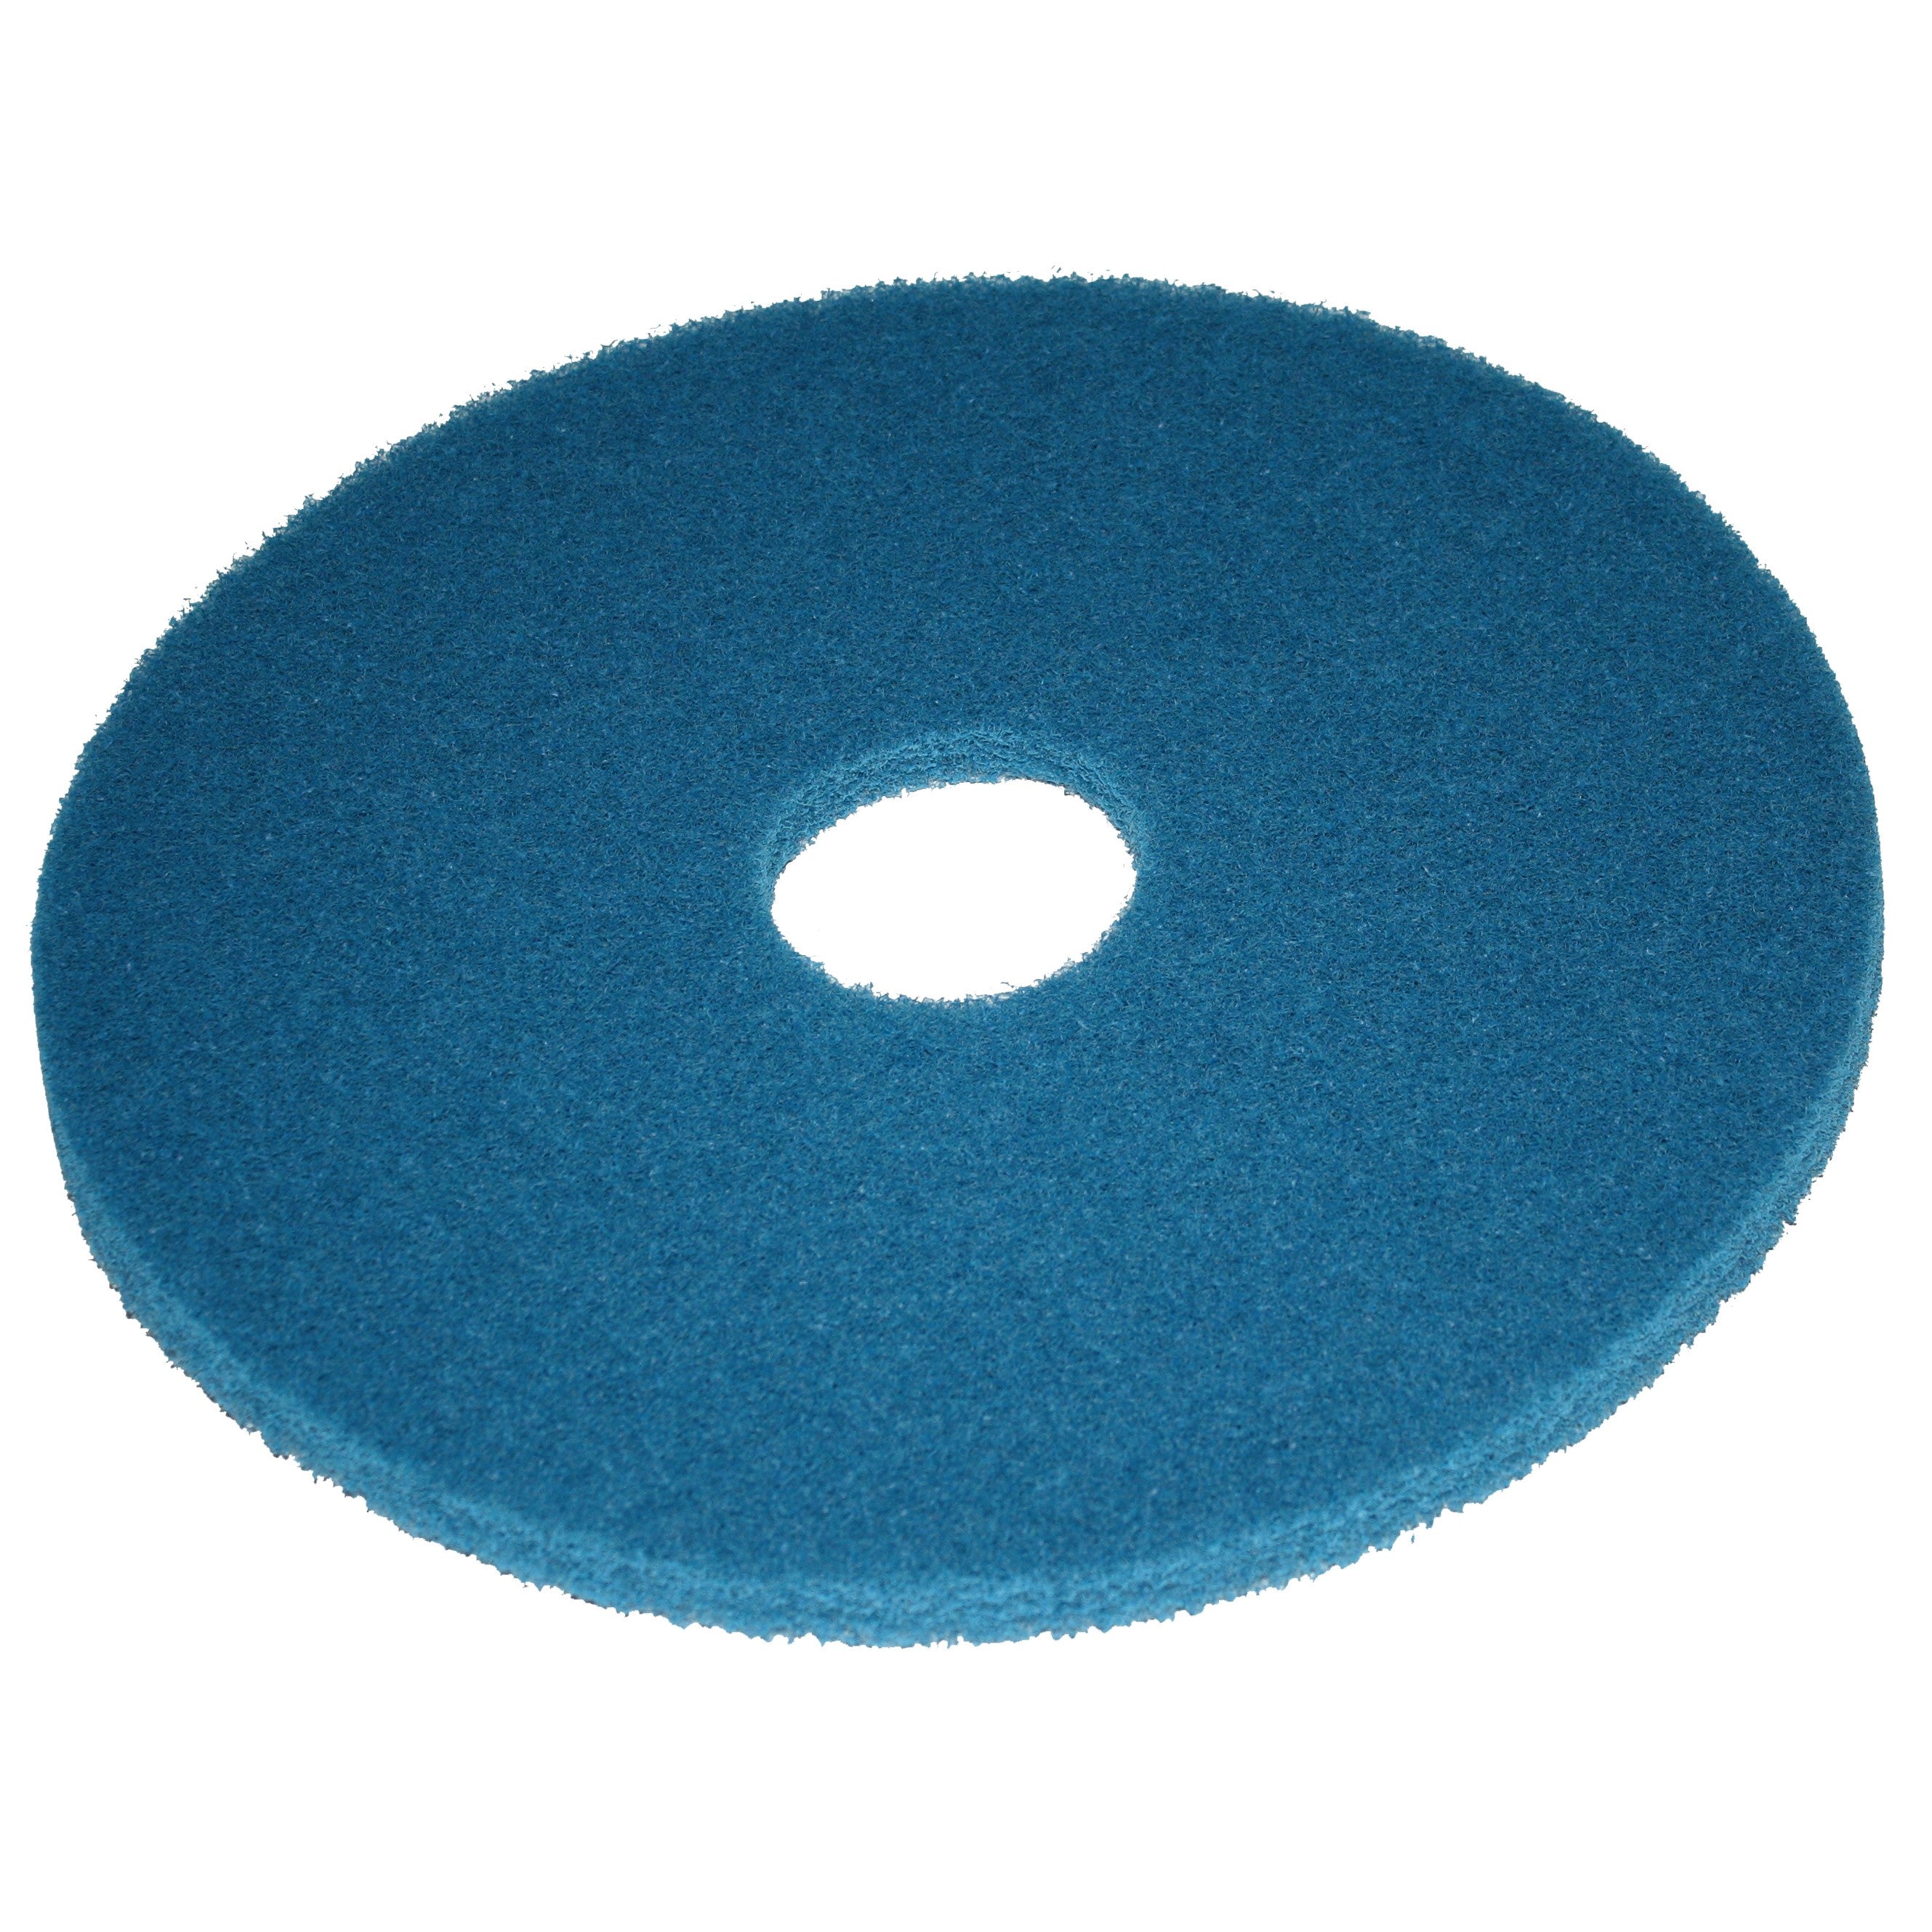 Pad blau, Ø 280 mm, Polyester